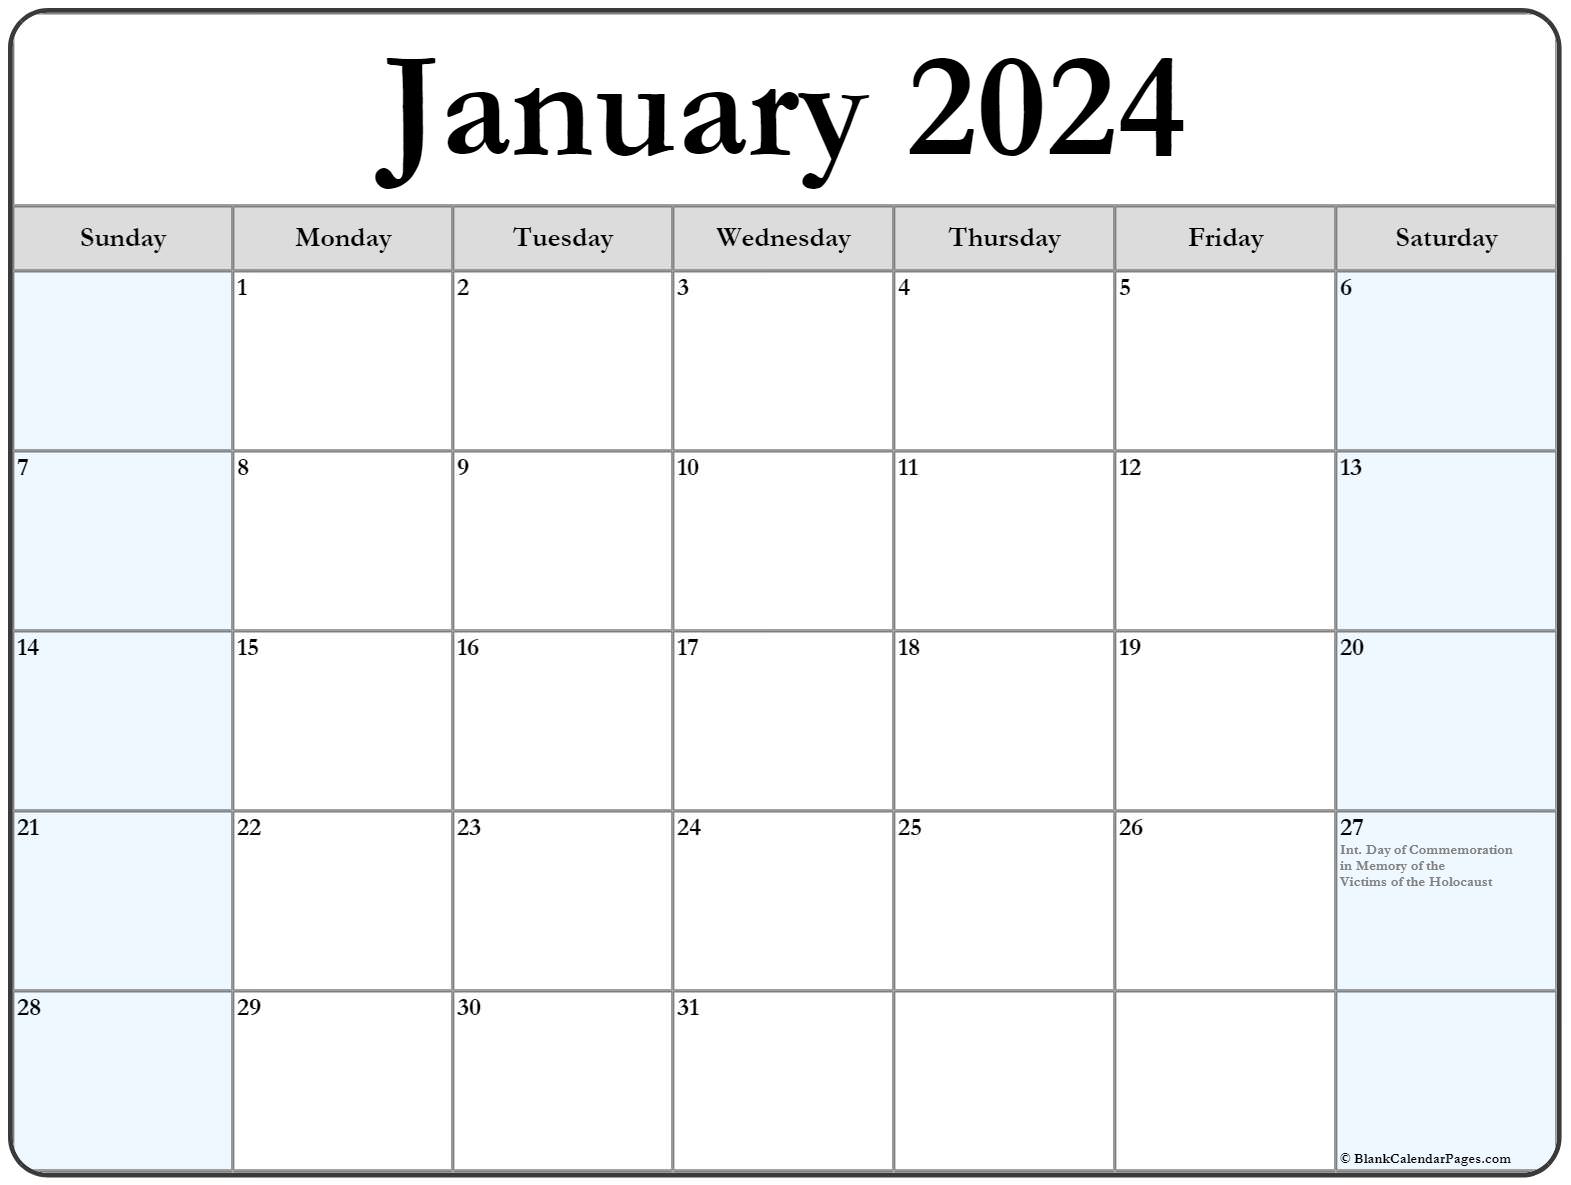 2023 word calendar us holidays printable calendar 2023 january 2023